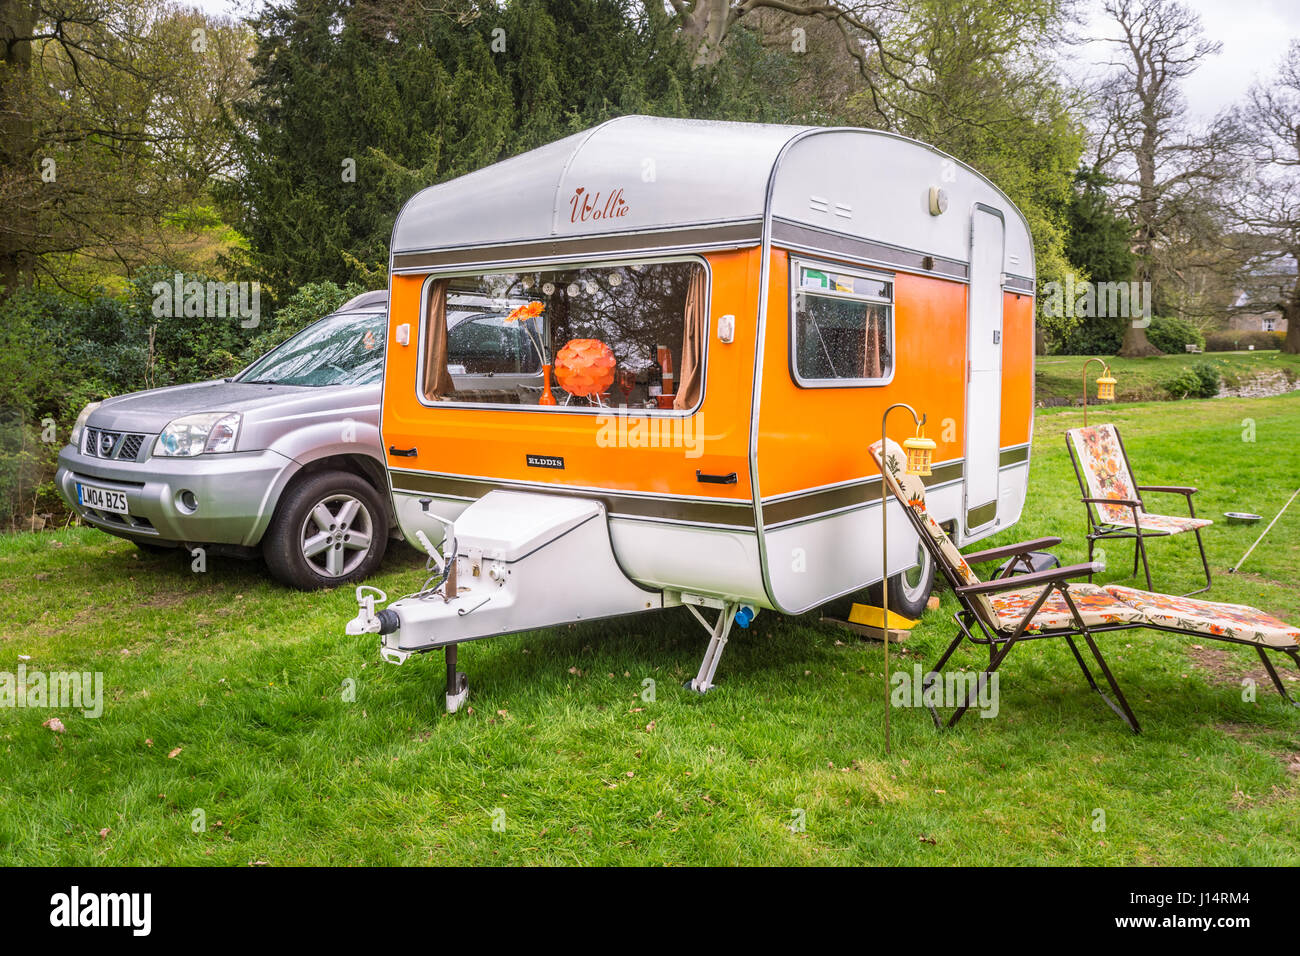 Typical old caravan or caravans in a park, Britain, in spring holiday ...